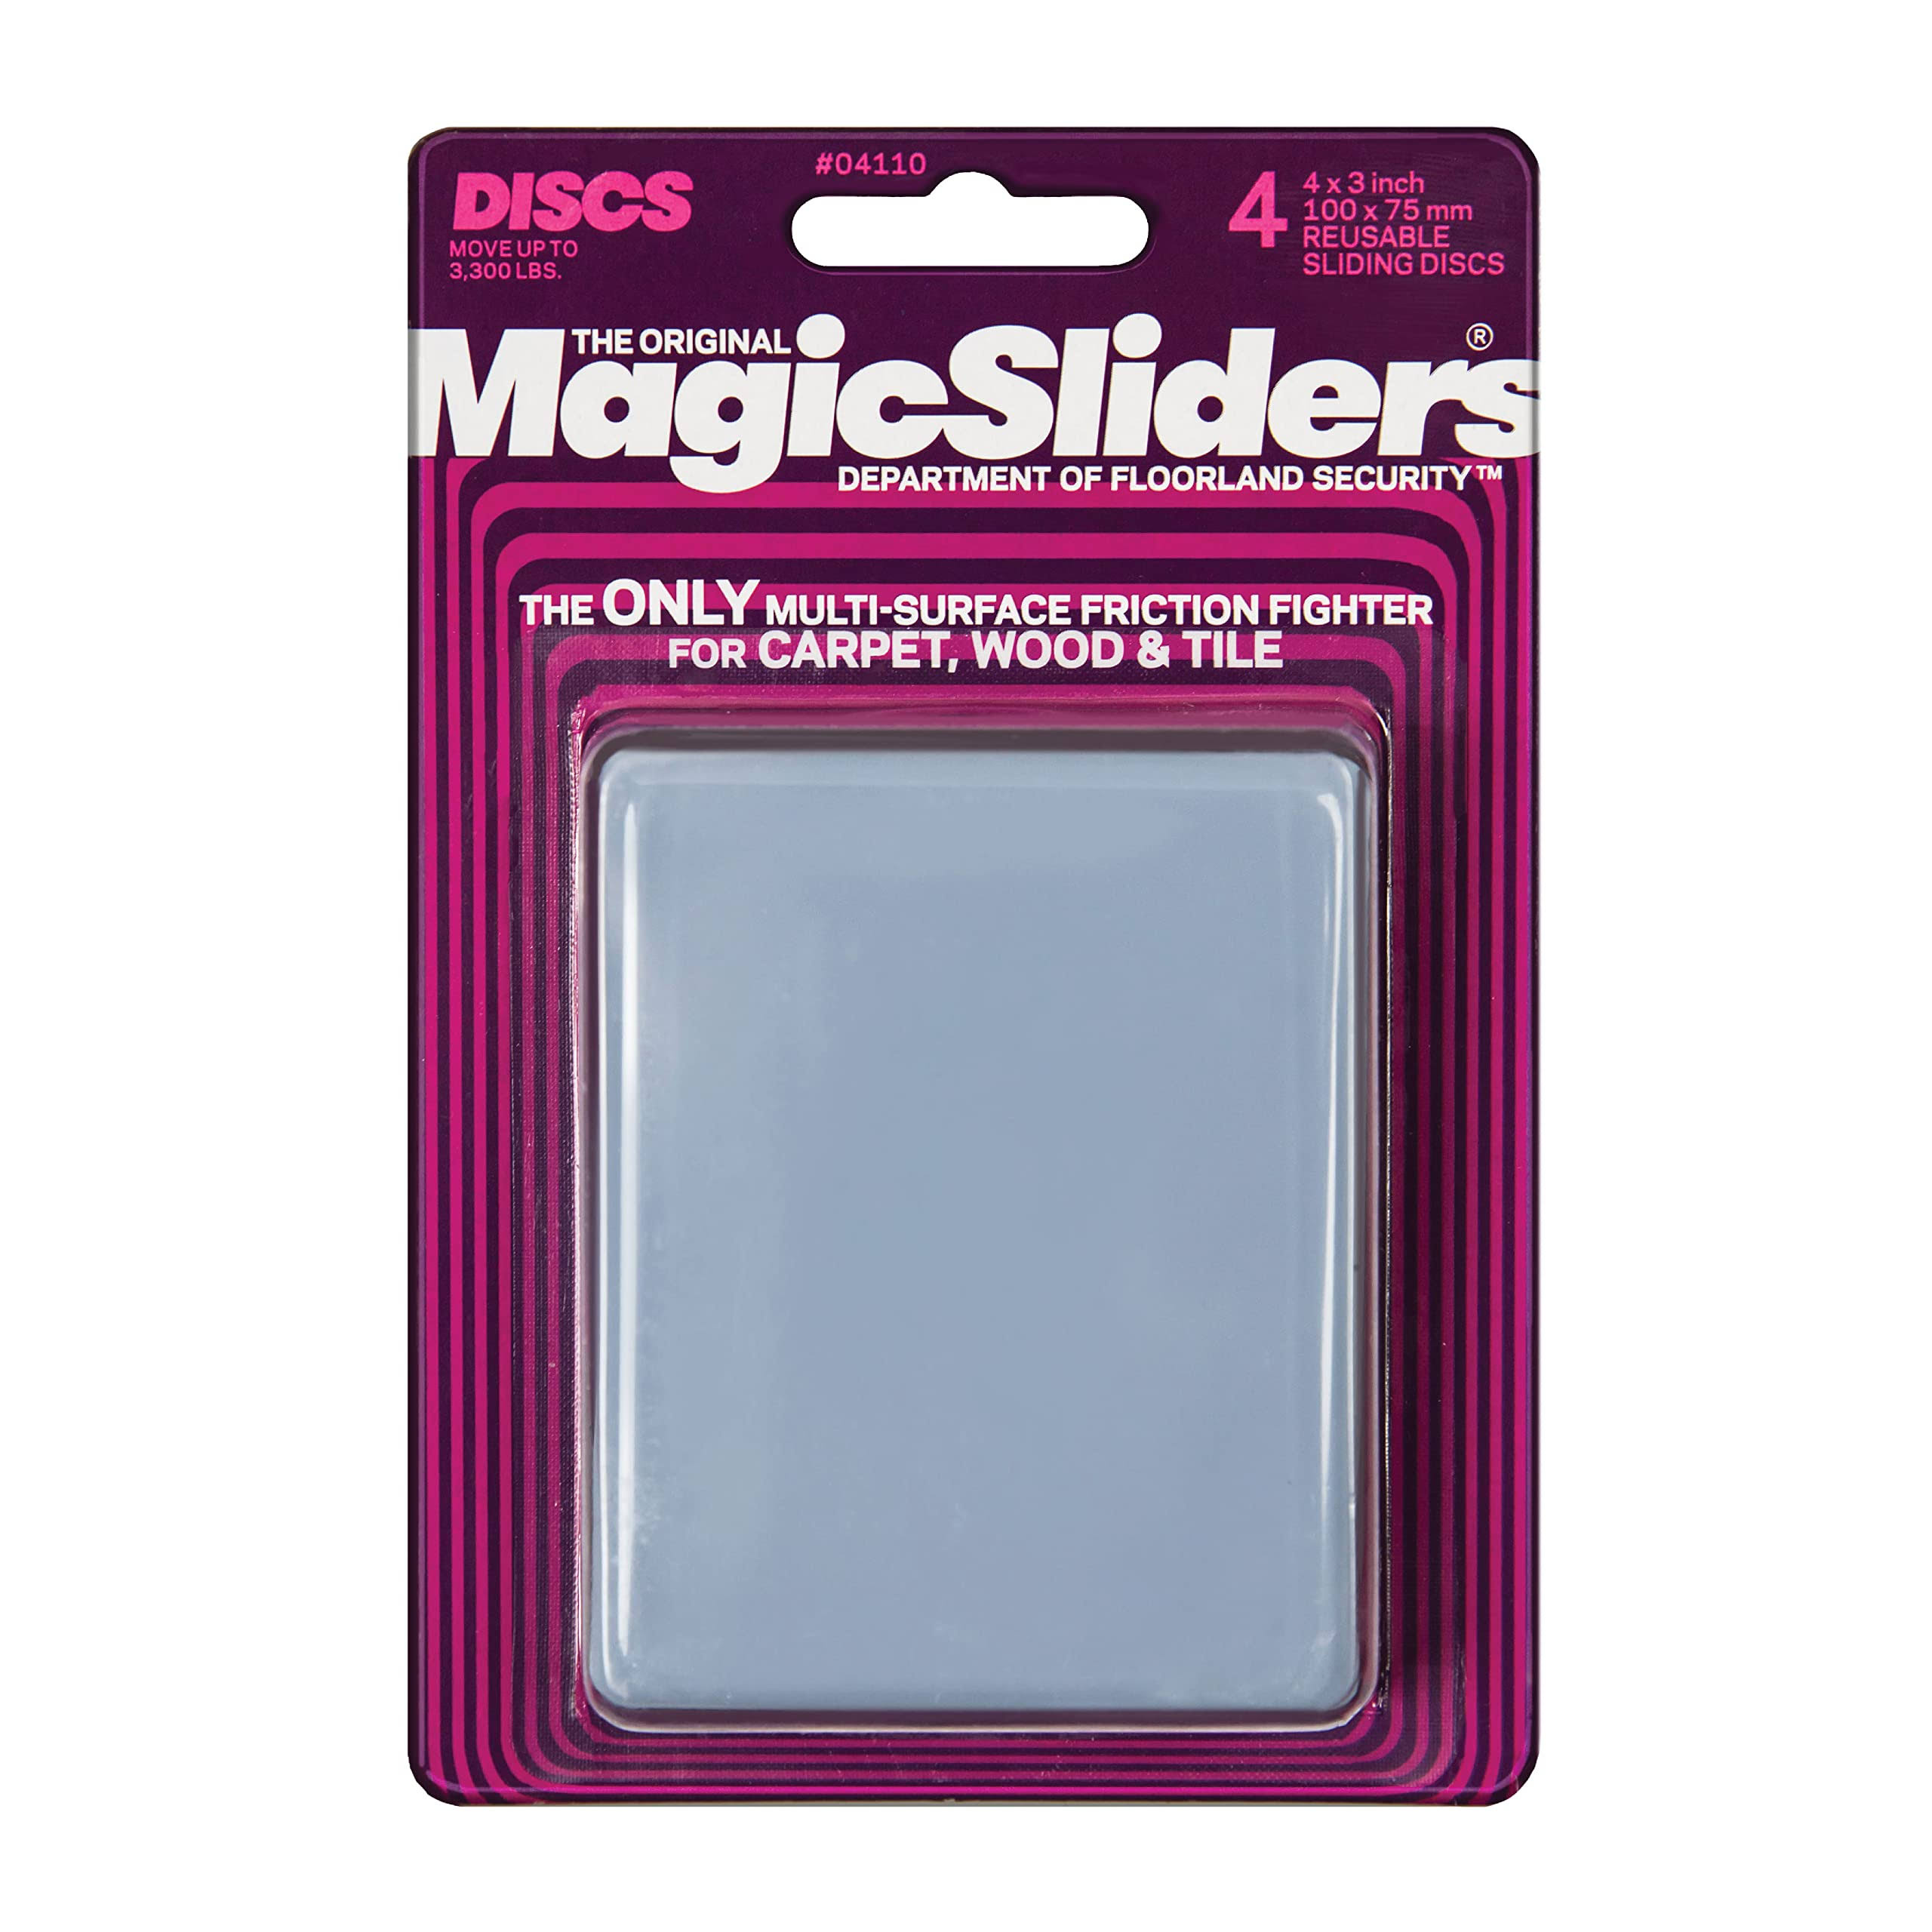 Magic Sliders Reusable Sliding Disc - 4" x 3", 4pk